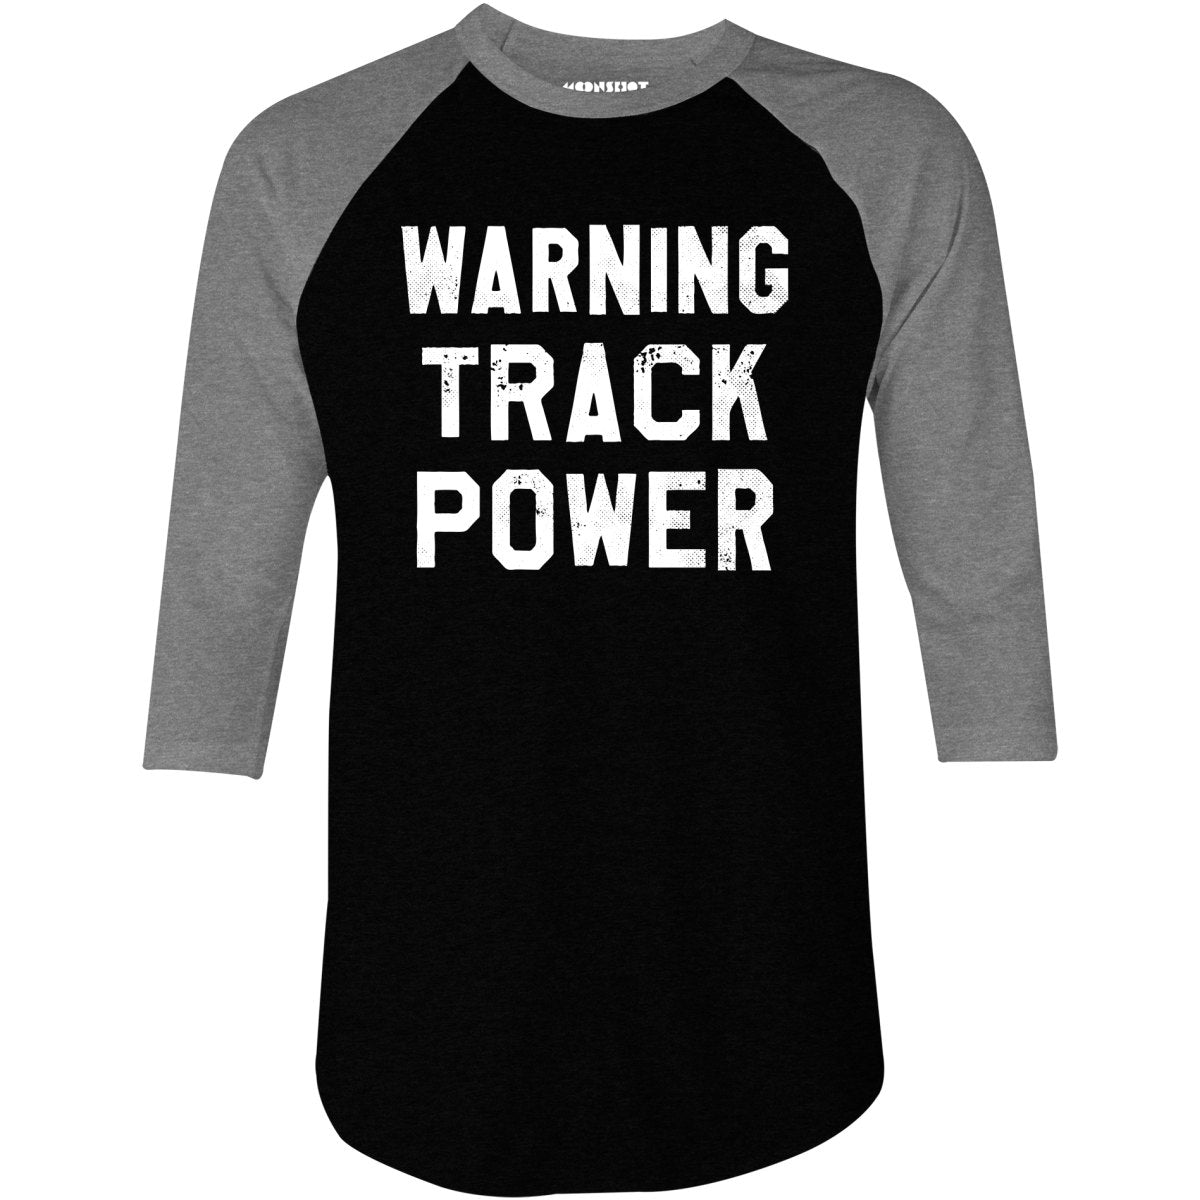 Warning Track Power - 3/4 Sleeve Raglan T-Shirt